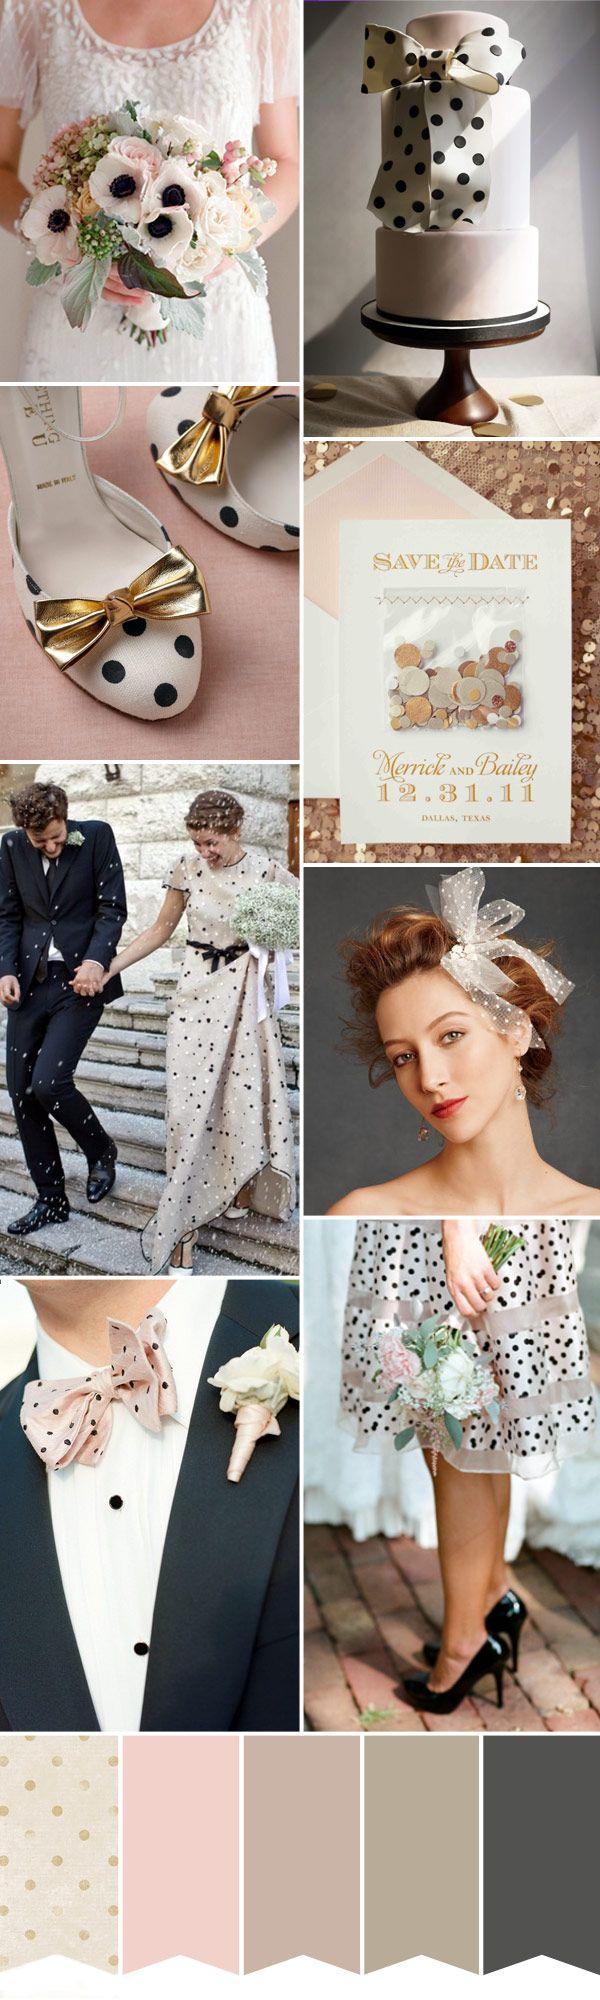 زفاف - Inspired By A Polka Dot Wedding - Blush, Gold And Grey Palette